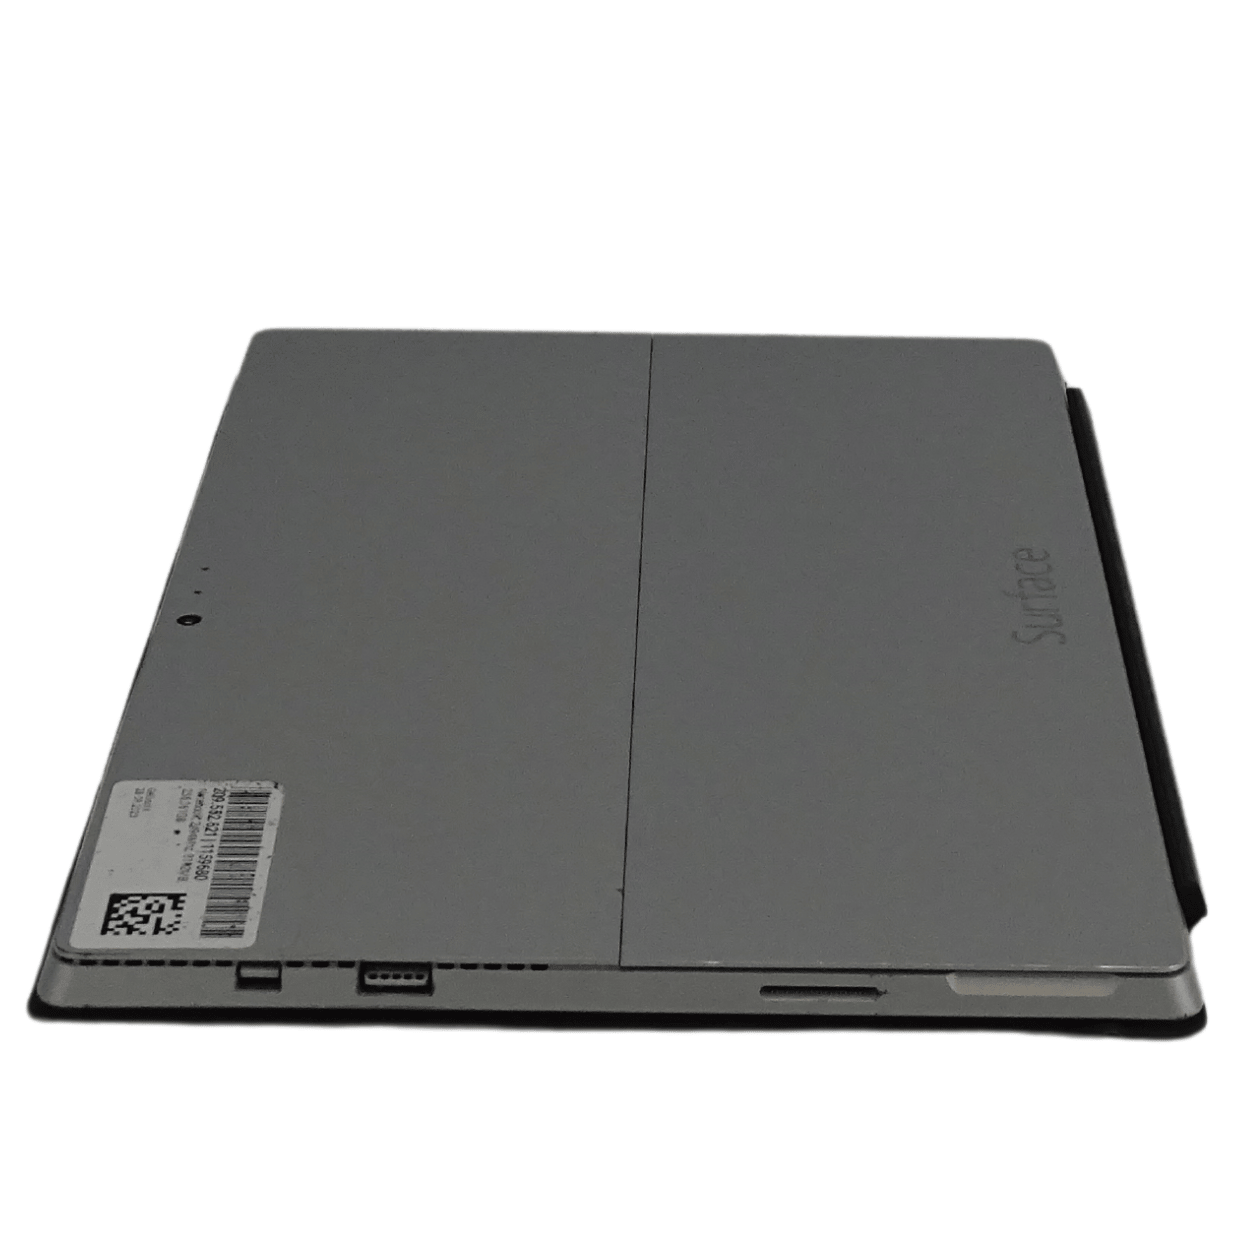 Microsoft Surface Pro 3 1631 

 - 12,1 Zoll - Intel Core i5 4300U @ 1,9 GHz - 8 GB - 256 GB SSD - 2160x1440 FHD+ - Windows 10 Professional - Fair